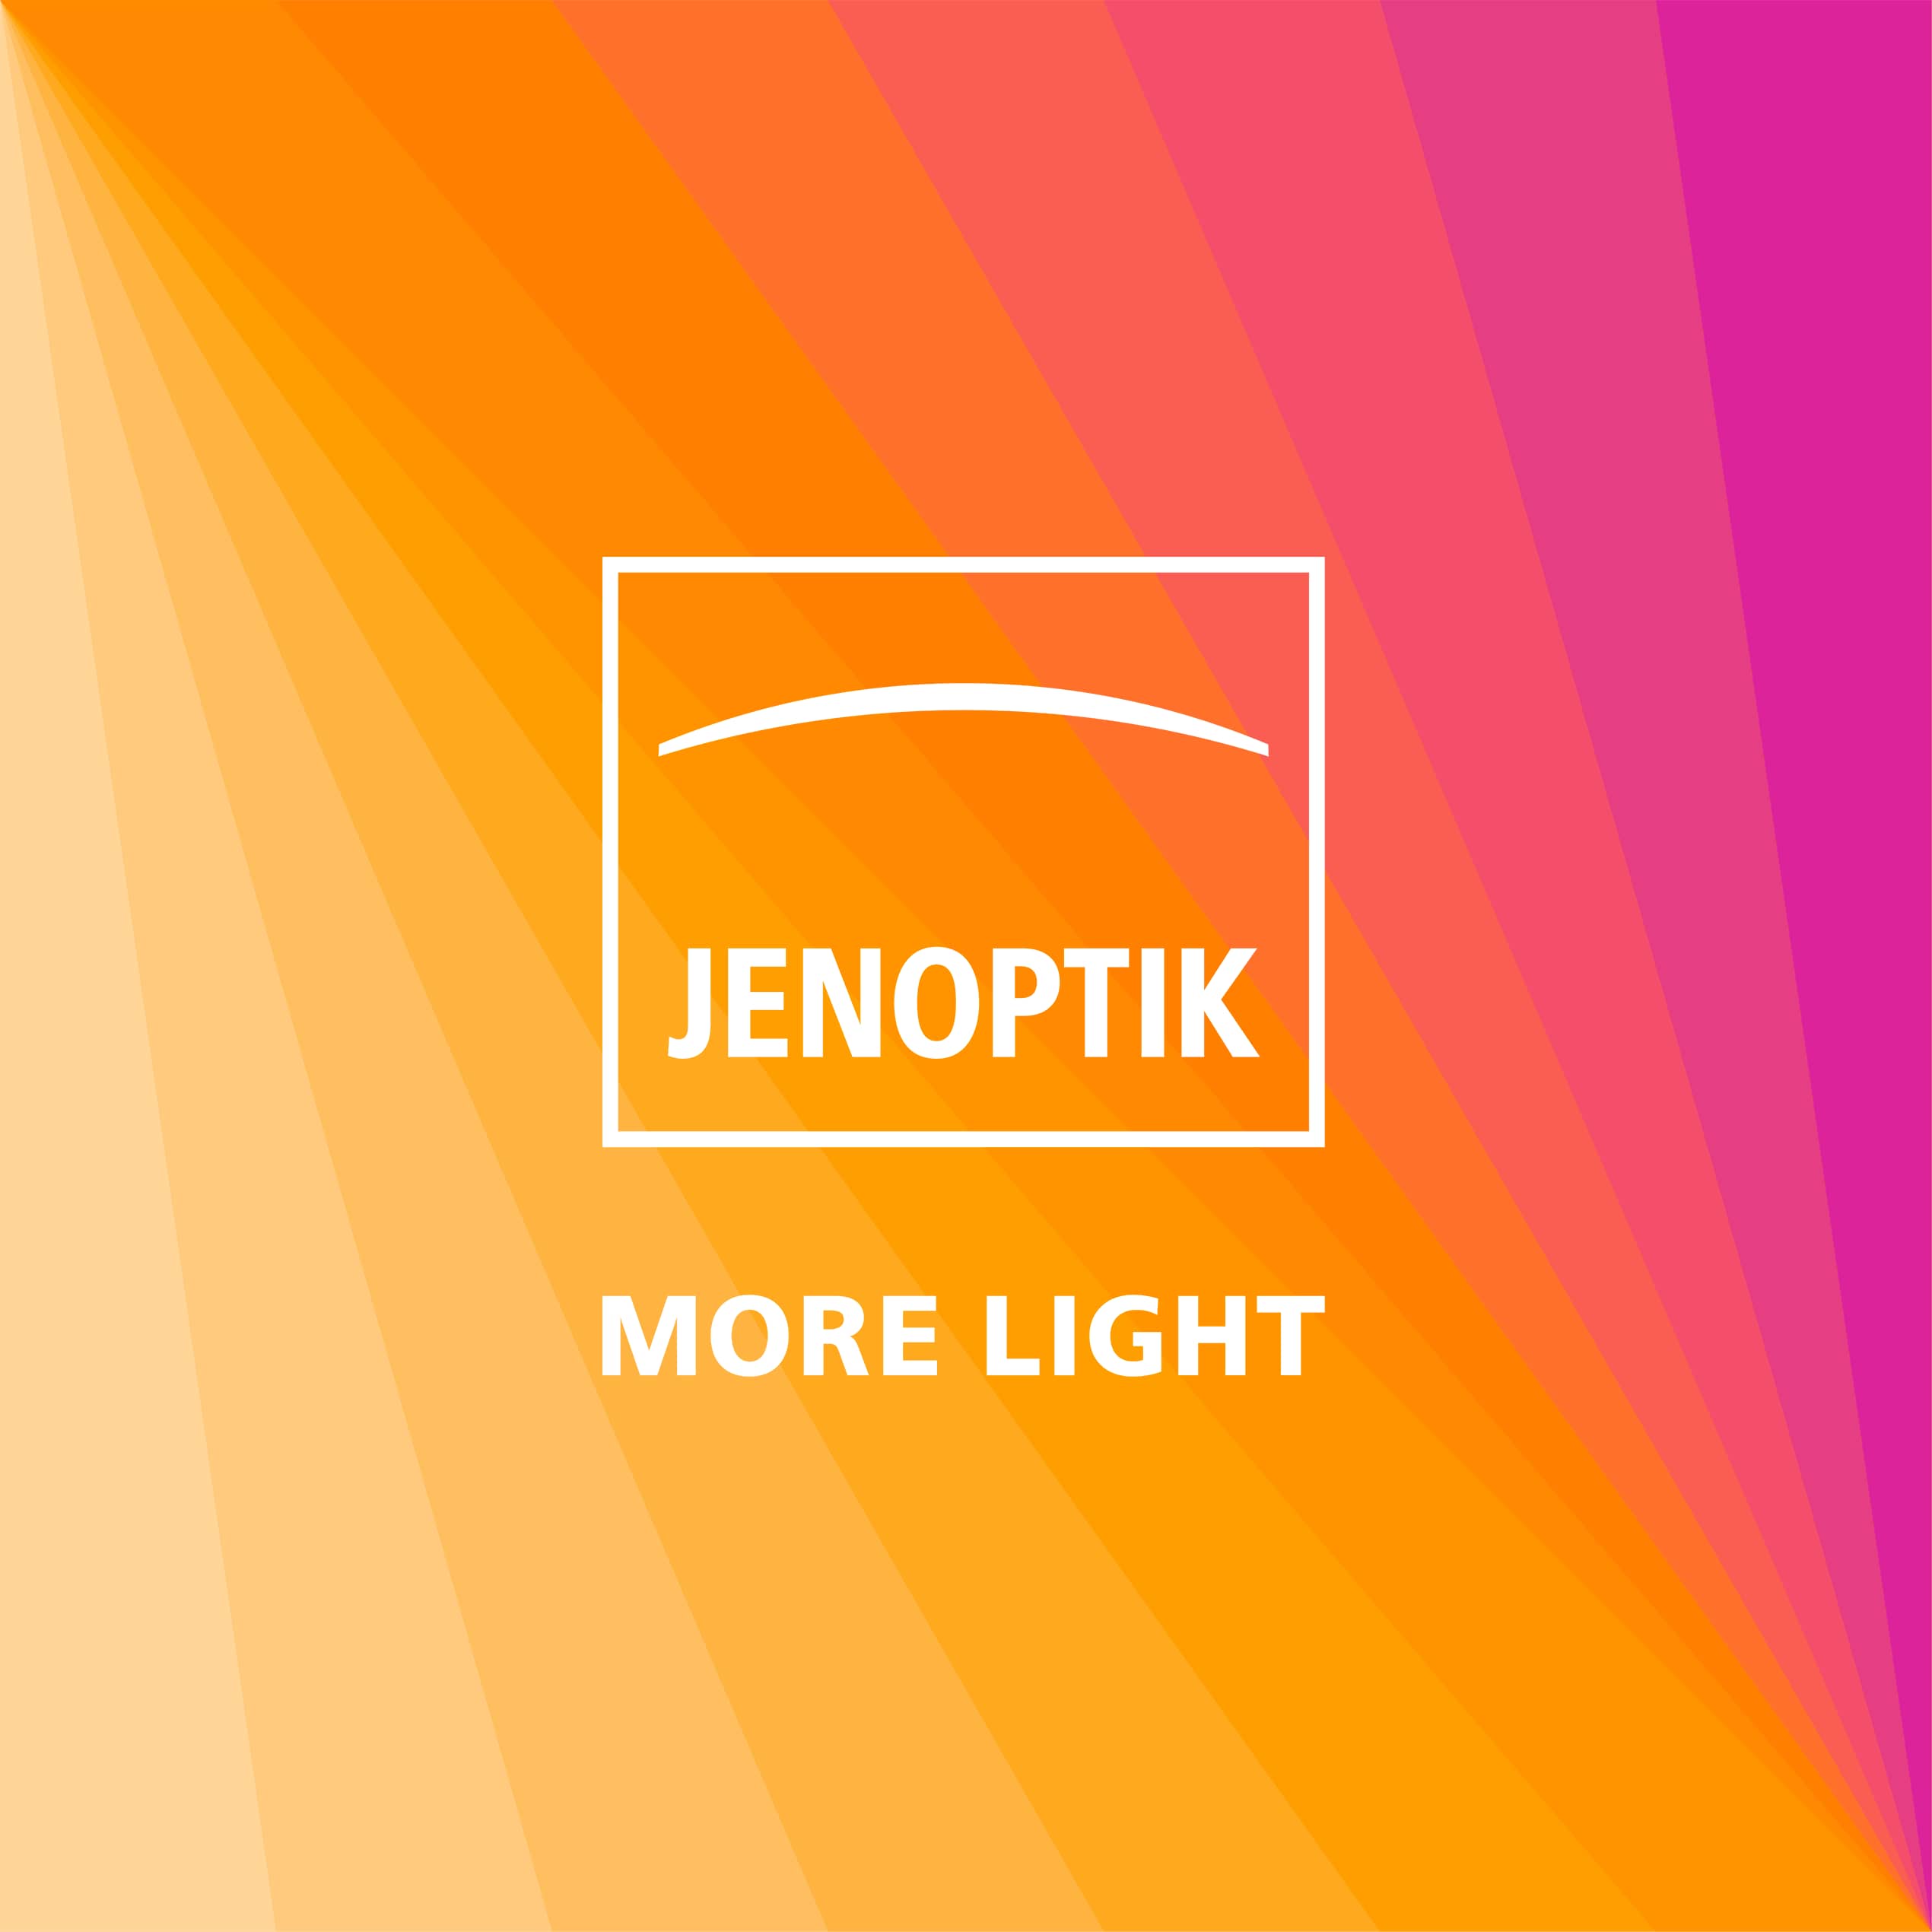 (c) Jenoptik.com